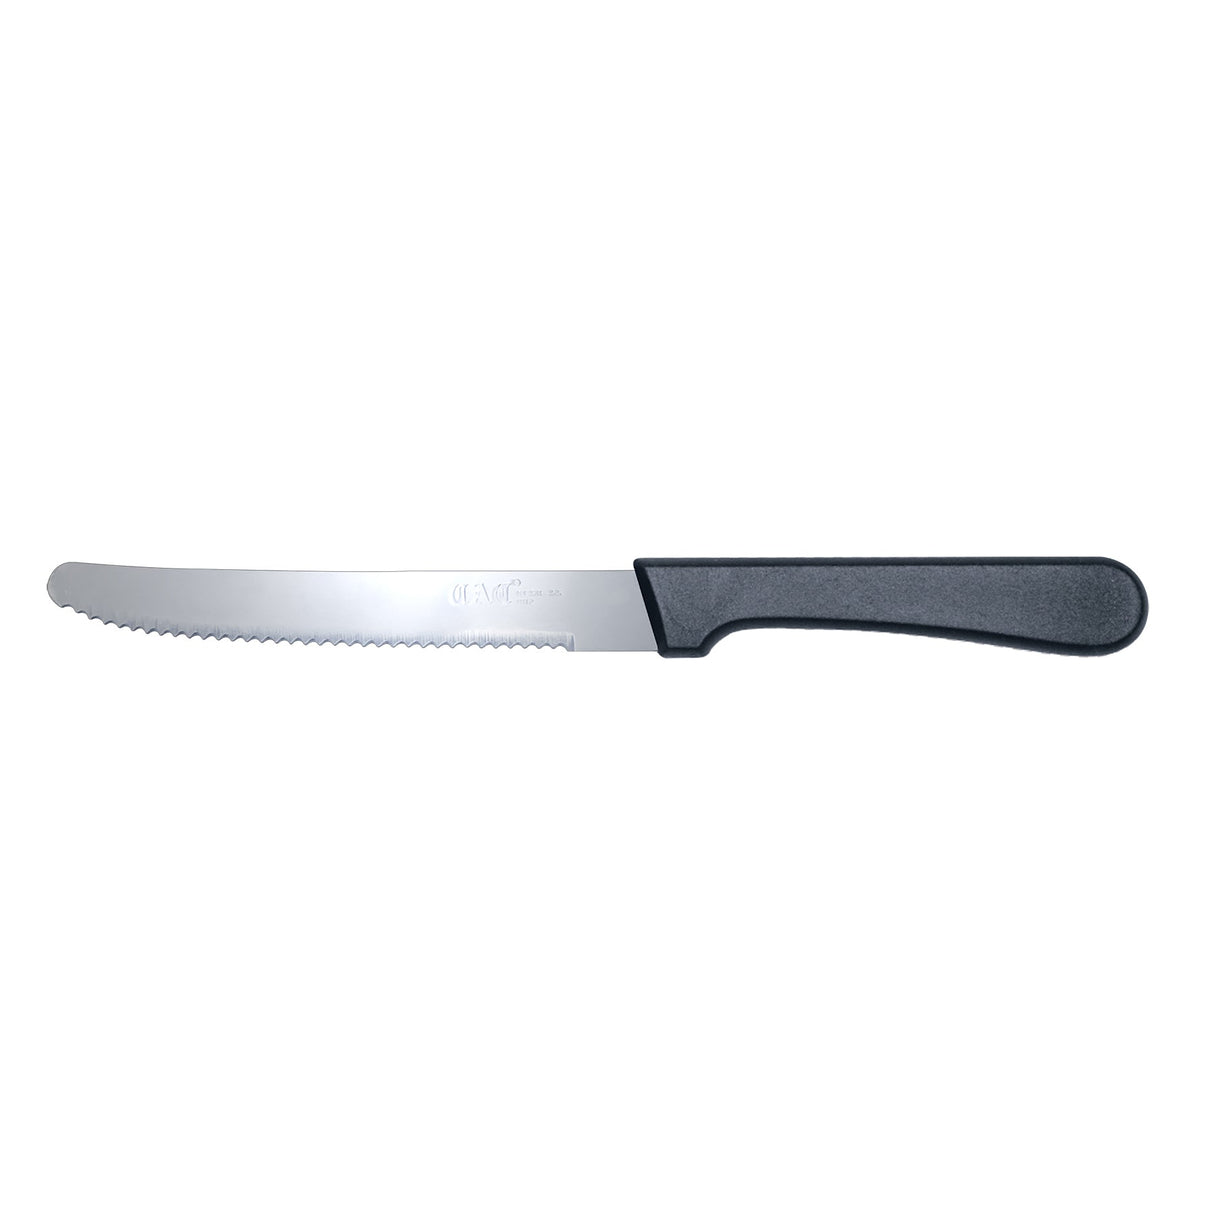 Knife Steak Round Tip Plastic Hdl 5"